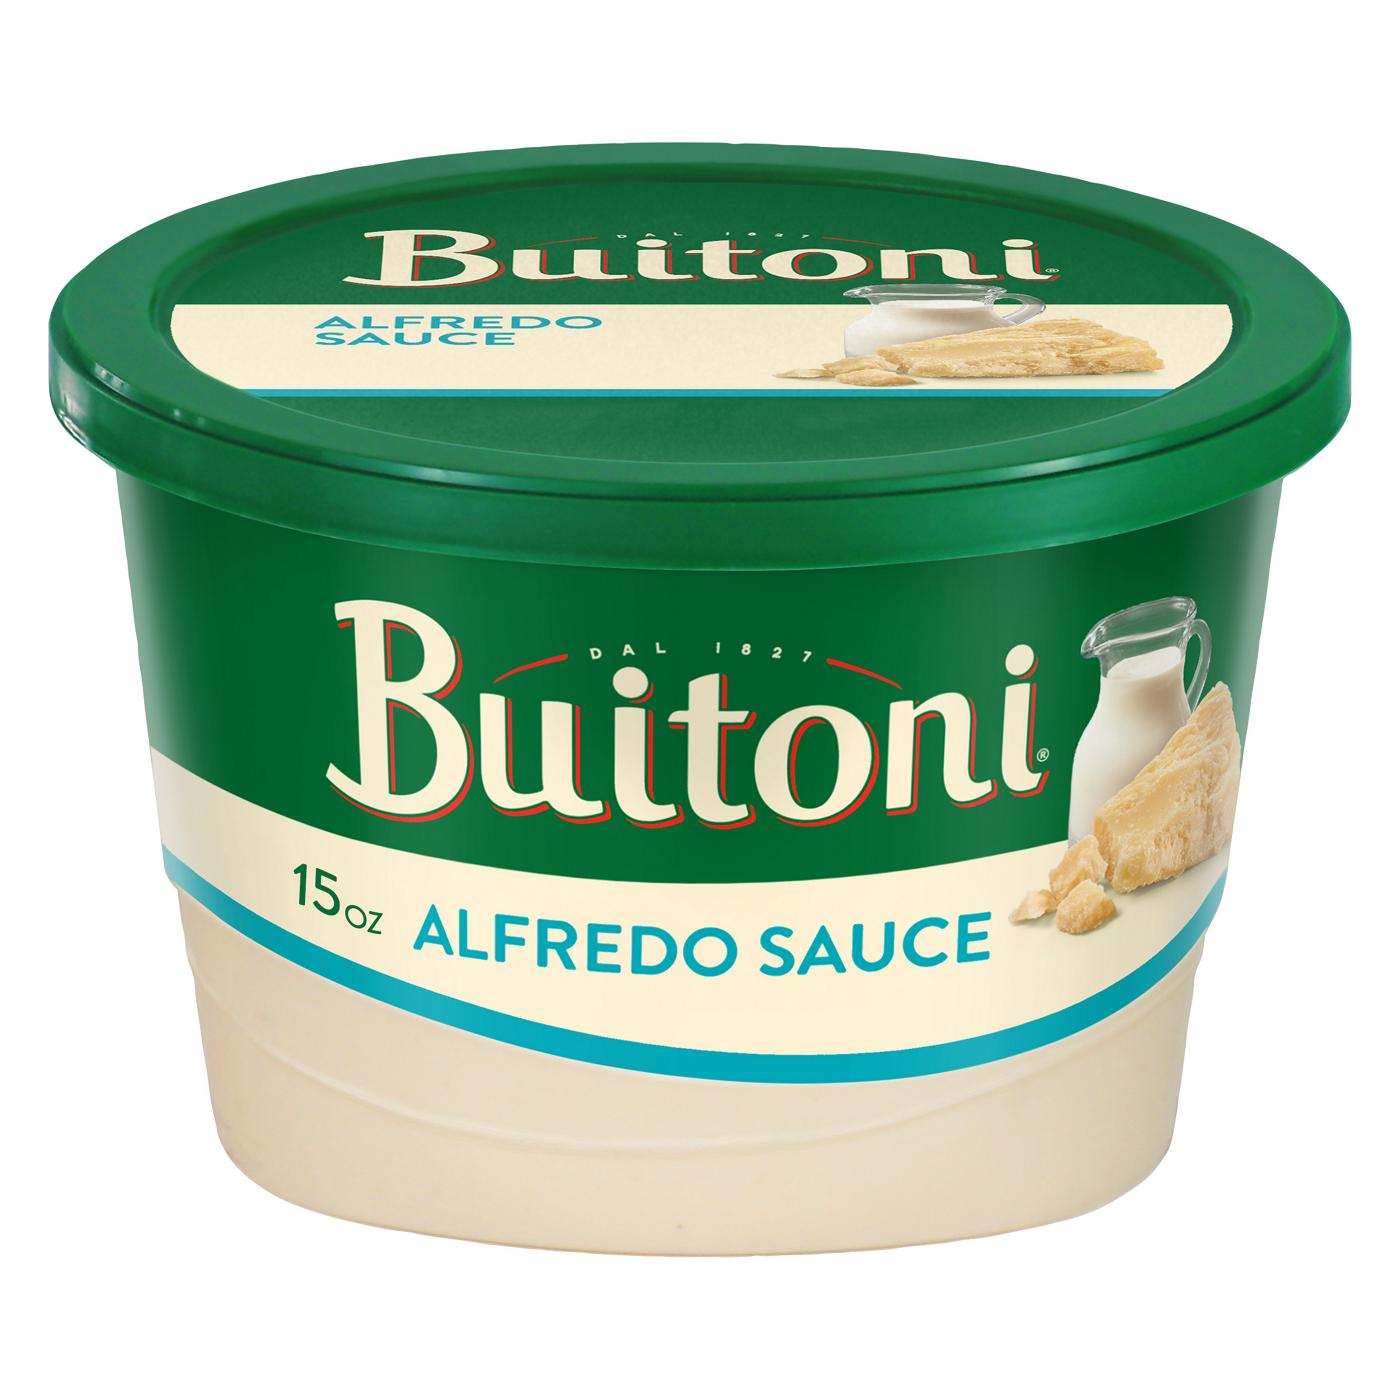 Buitoni Alfredo Sauce; image 1 of 9